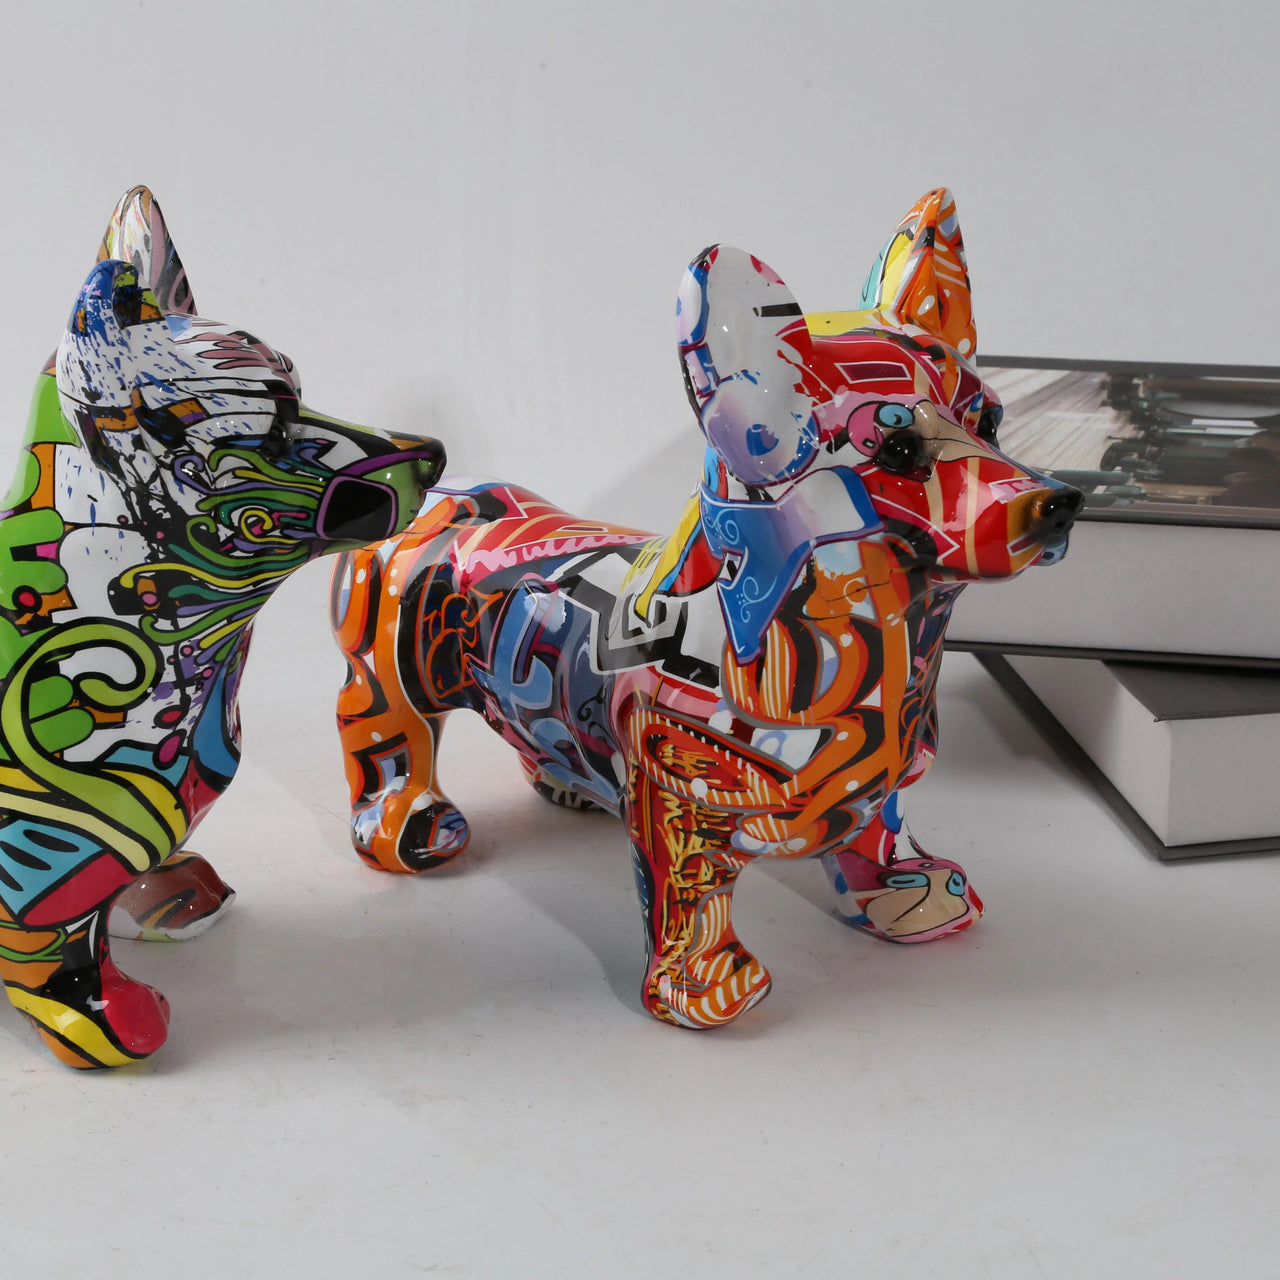 Corgi Dog Art Graffiti Painting Sculptures and Statues Creative Resin Crafts